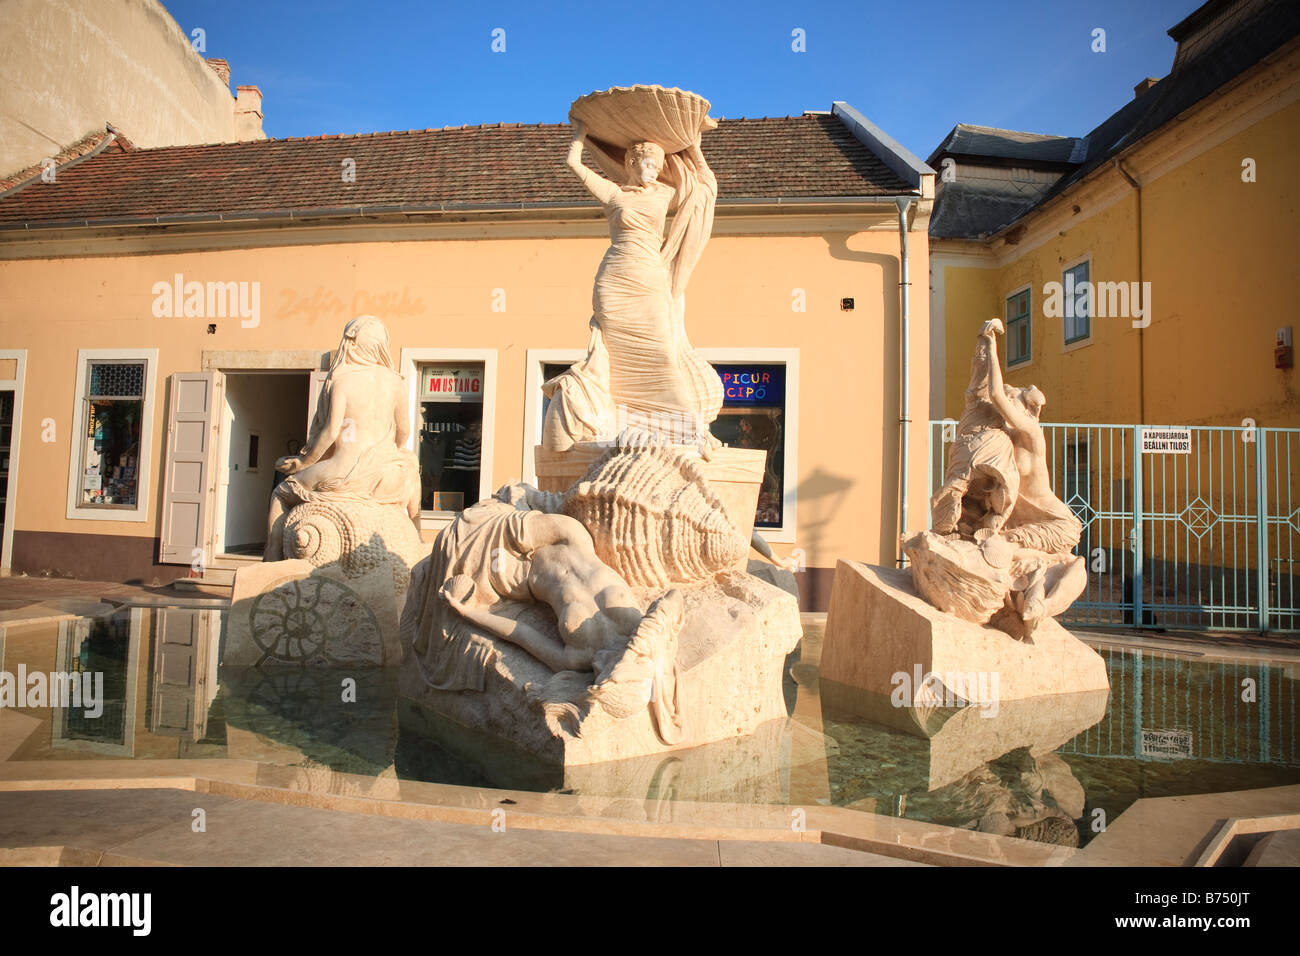 Statue esztergom hungary europe hi-res stock photography and images - Alamy